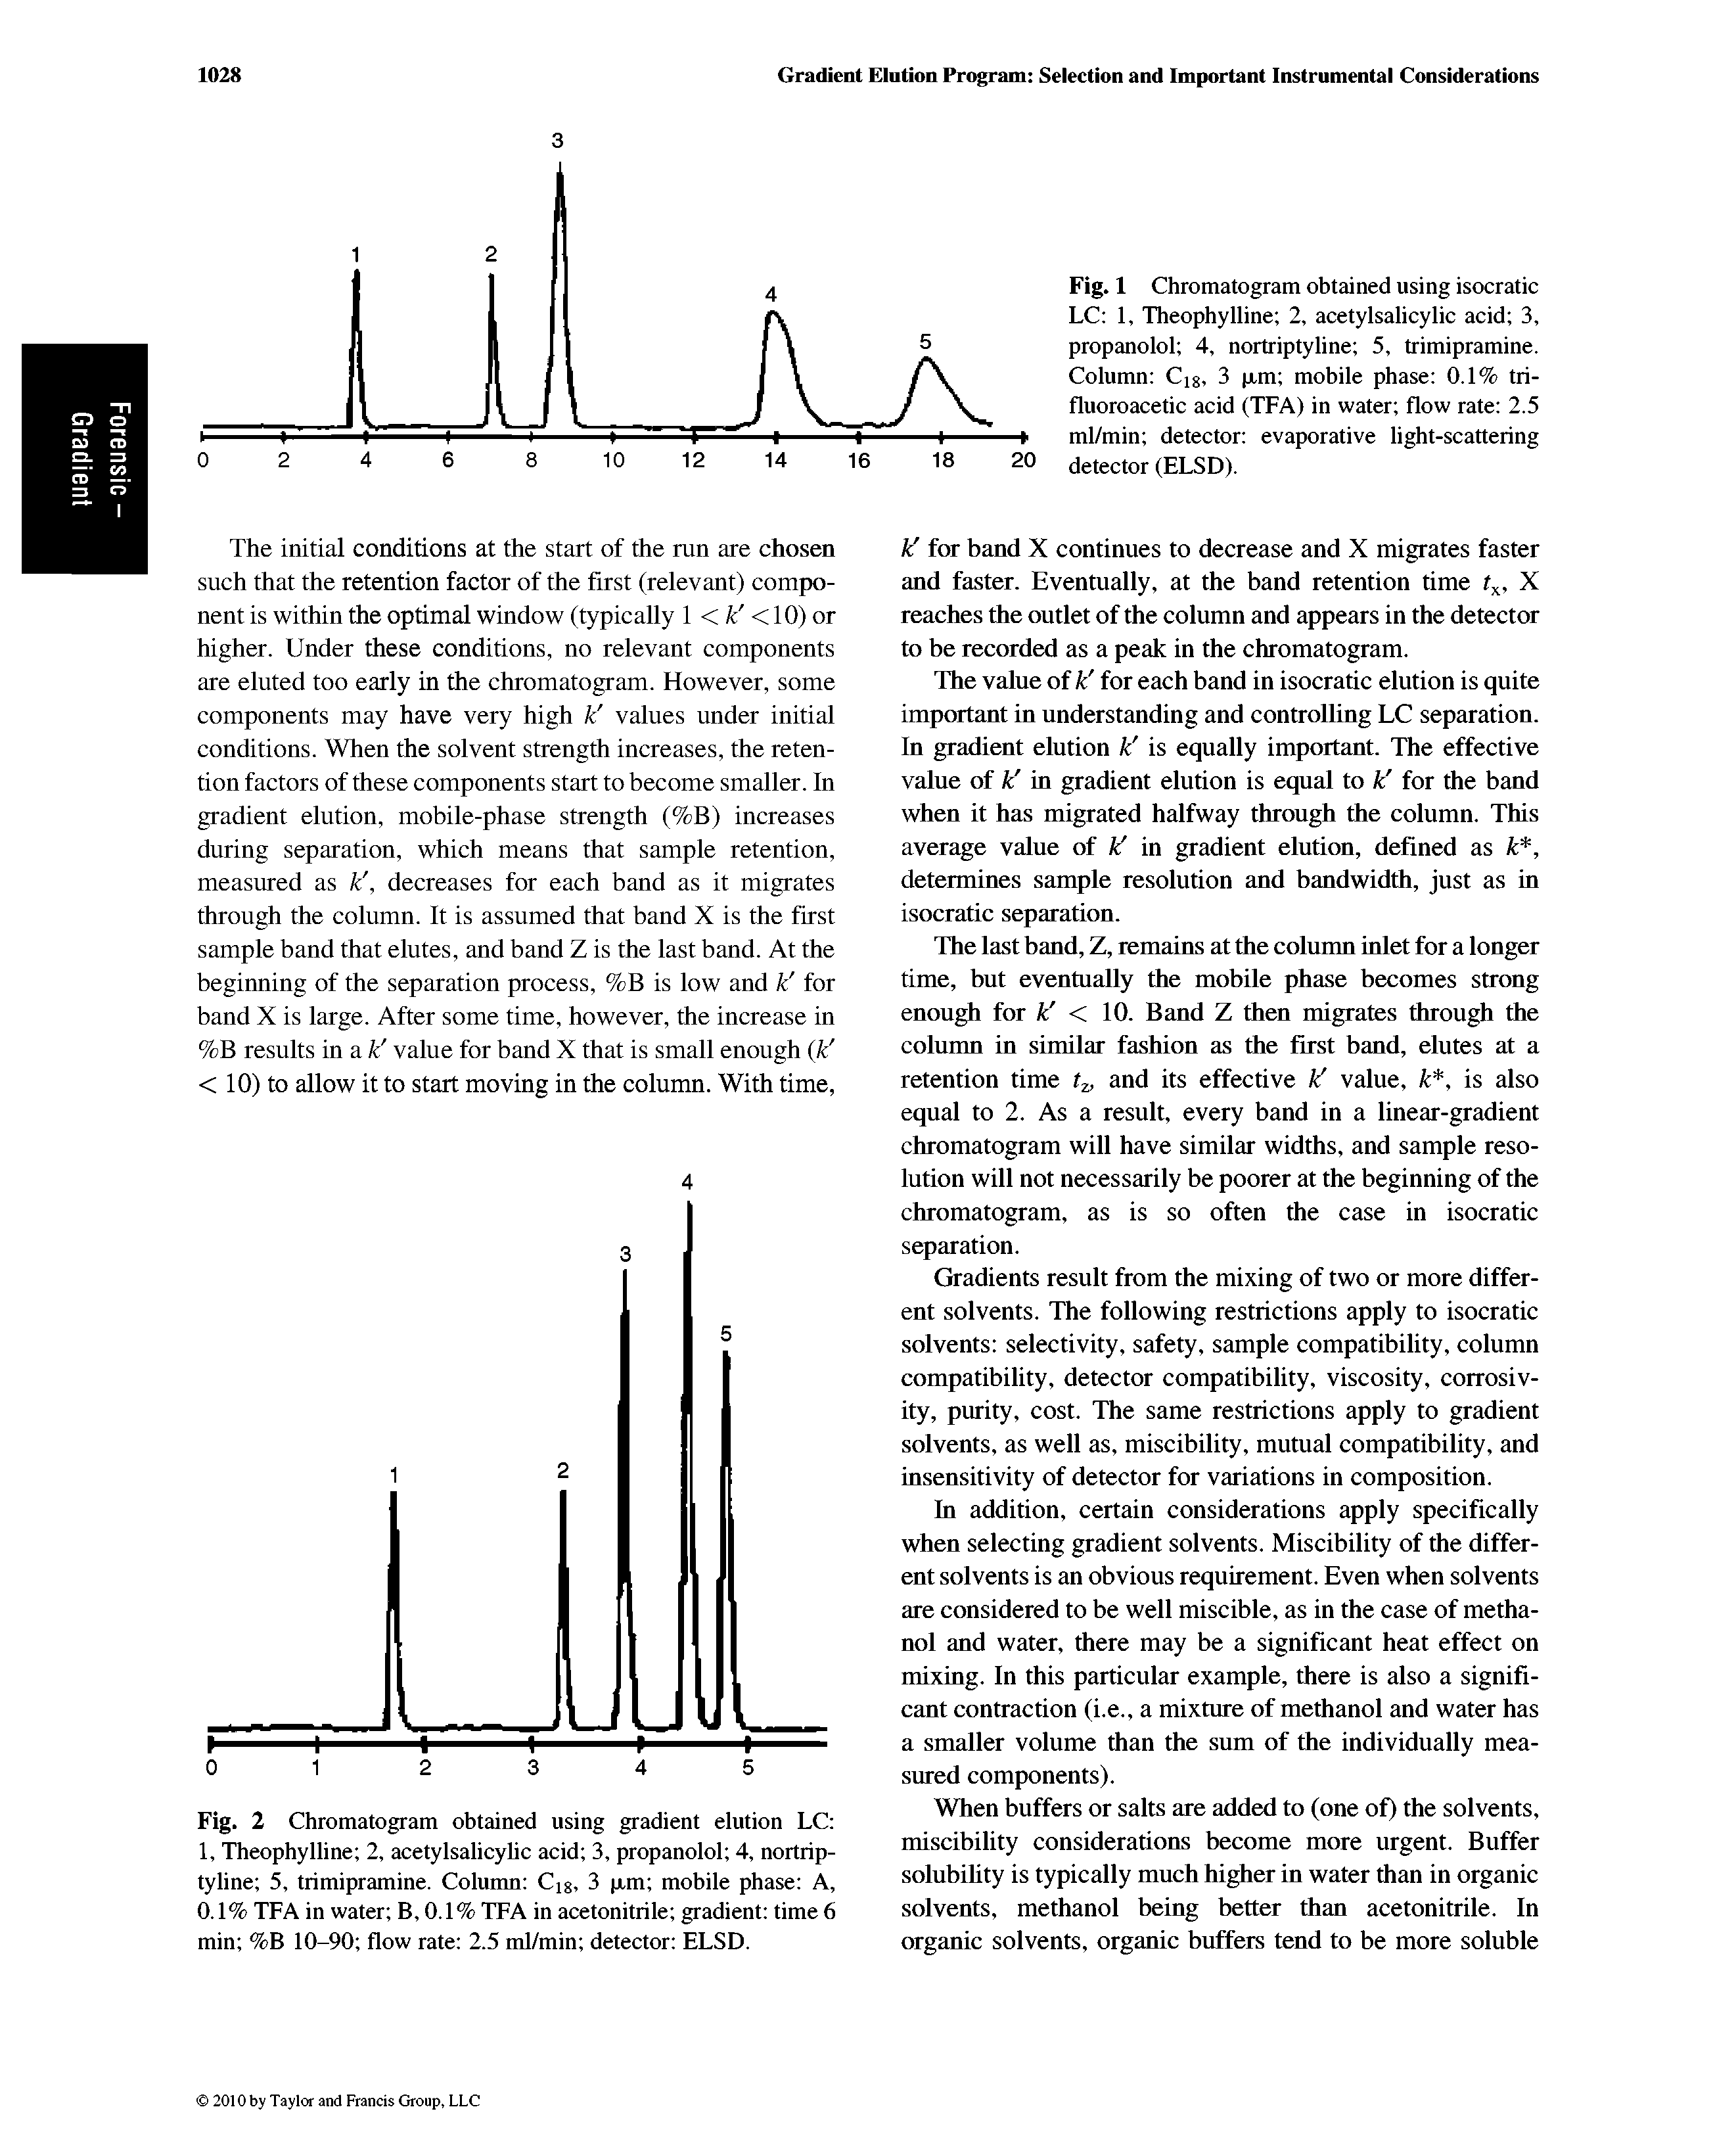 Fig. 1 Chromatogram obtained using isocratic LC 1, Theophylline 2, acetylsalicylic acid 3, propanolol 4, nortriptyline 5, trimipramine. Column Cig, 3 jtm mobile phase 0.1% tri-fluoroacetic acid (TFA) in water flow rate 2.5 ml/min detector evaporative light-scattering detector (ELSD).